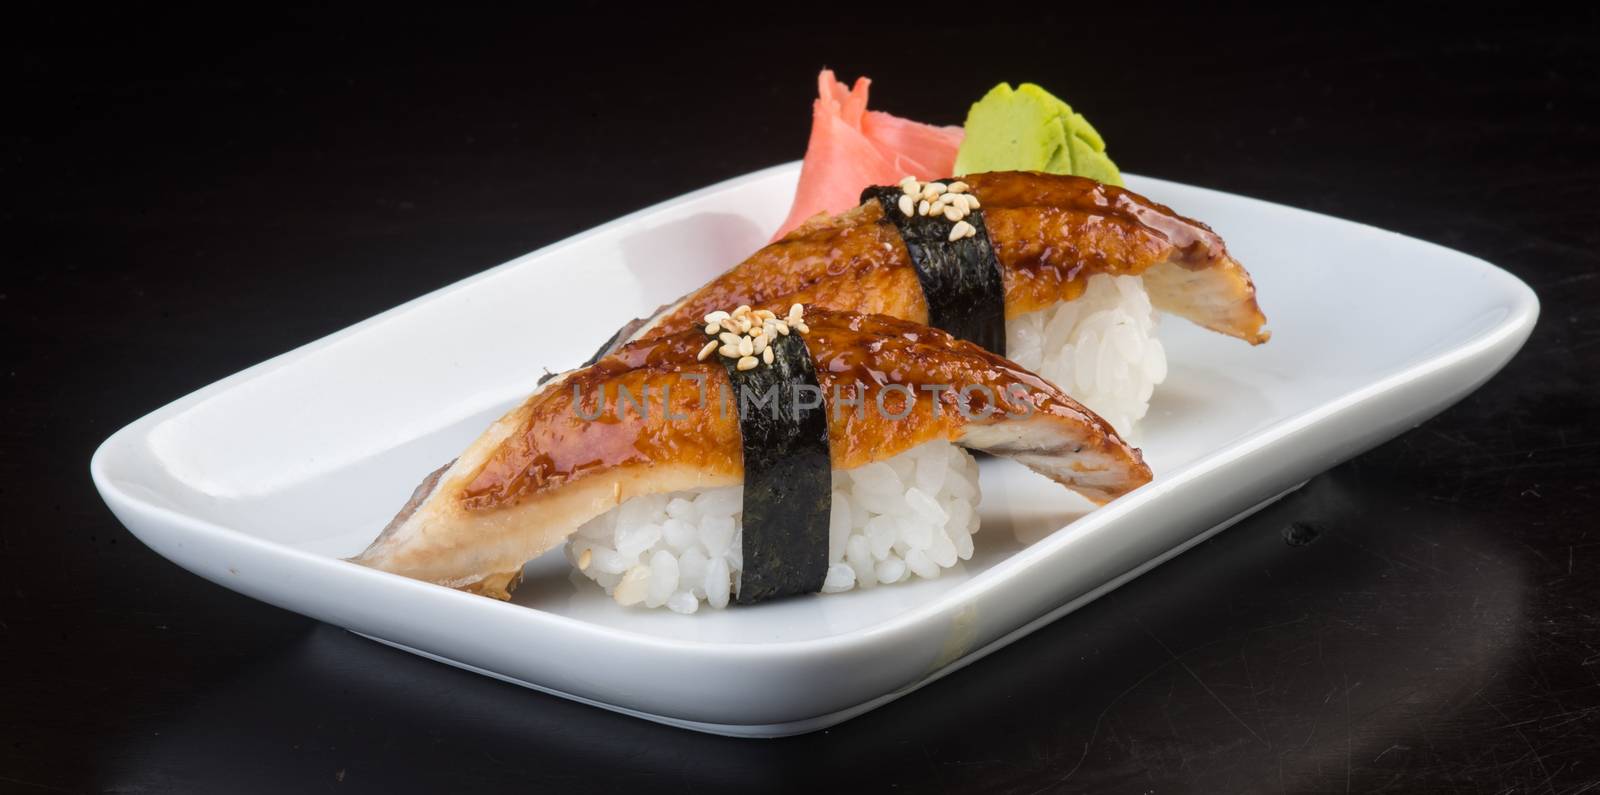 japanese cuisine. sushi unagi on the background by heinteh